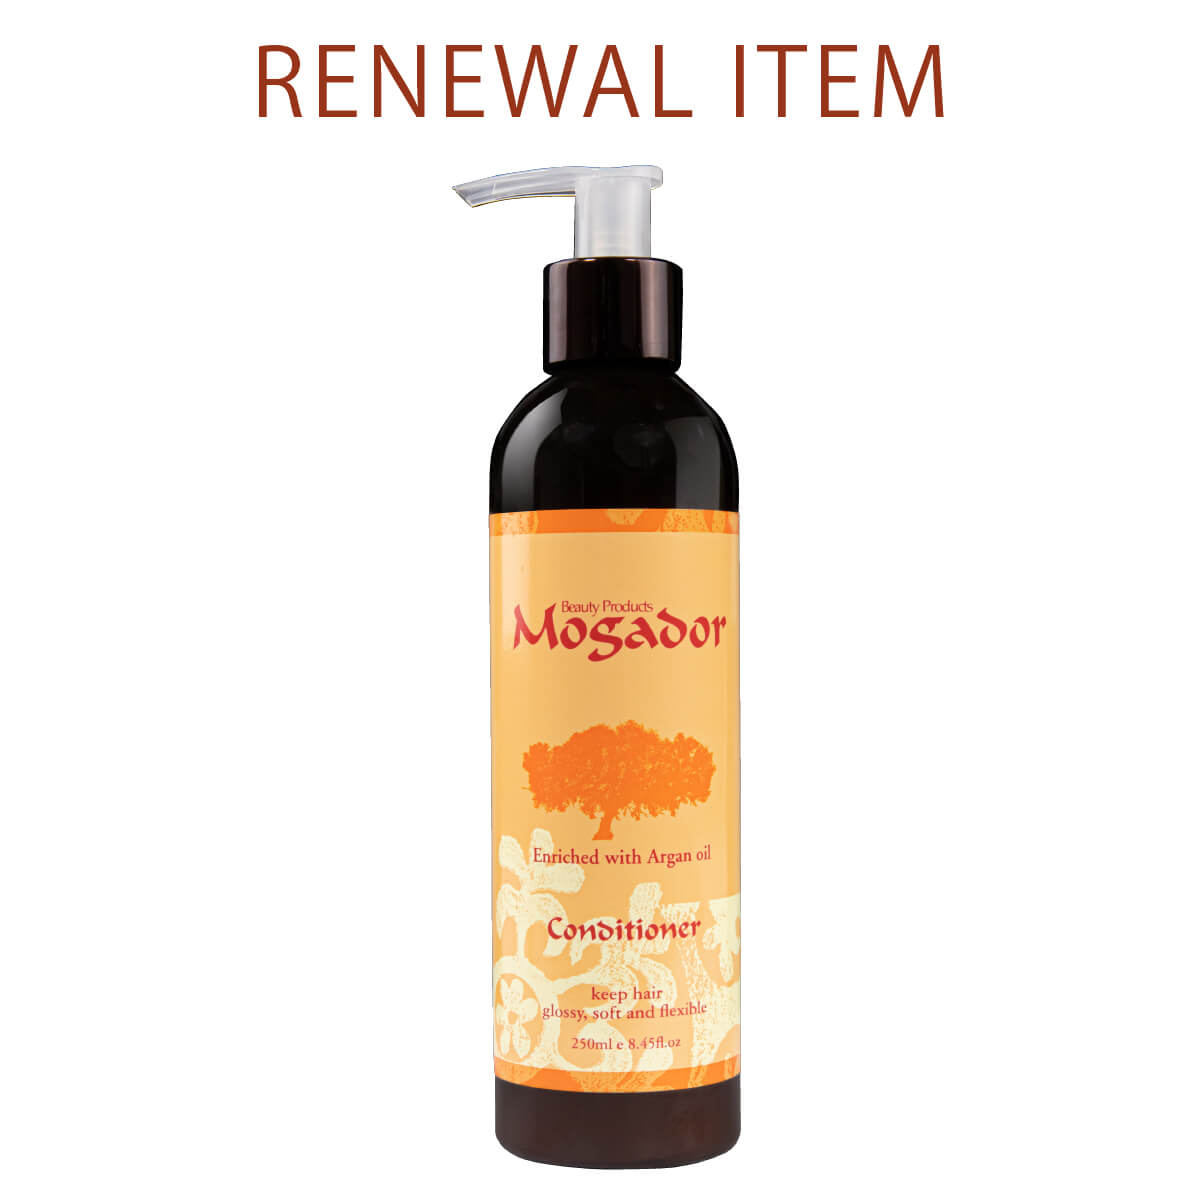 RENEWAL Mogador hair conditioner 250ml|JAS Organic Complex ™|日本限定 新し香りにリニューアル